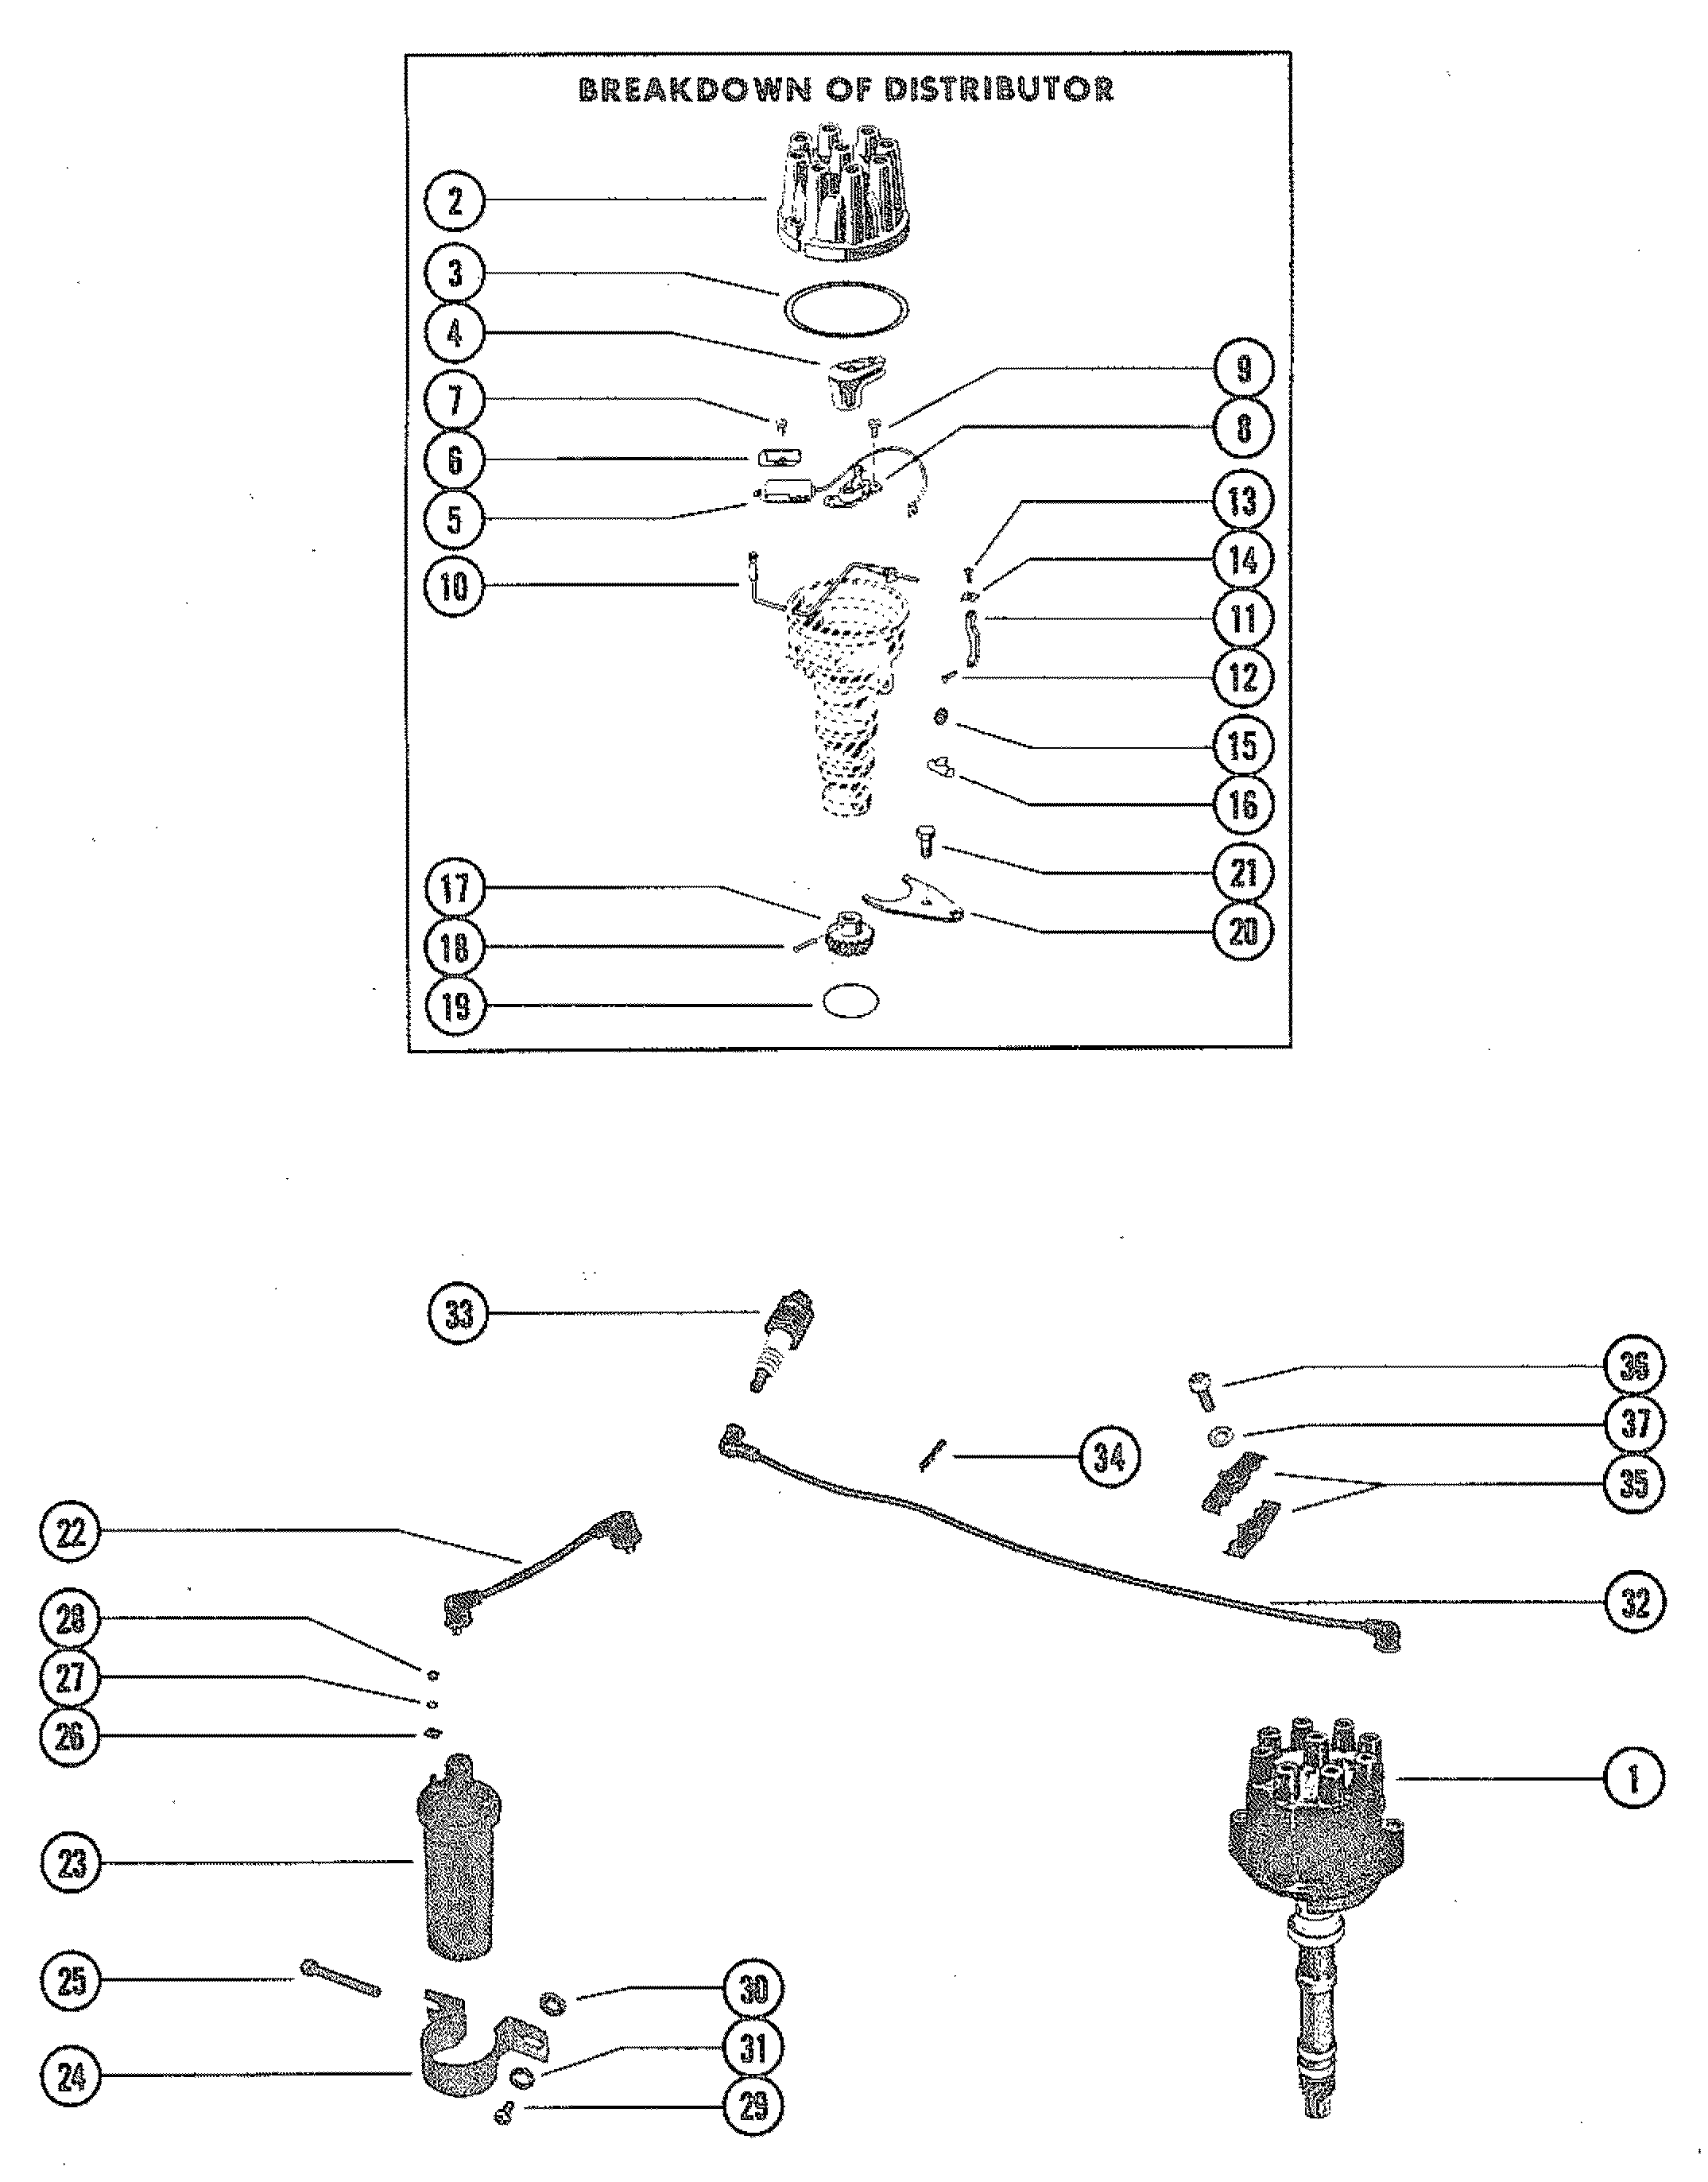 1976 honda cb550 wiring diagram